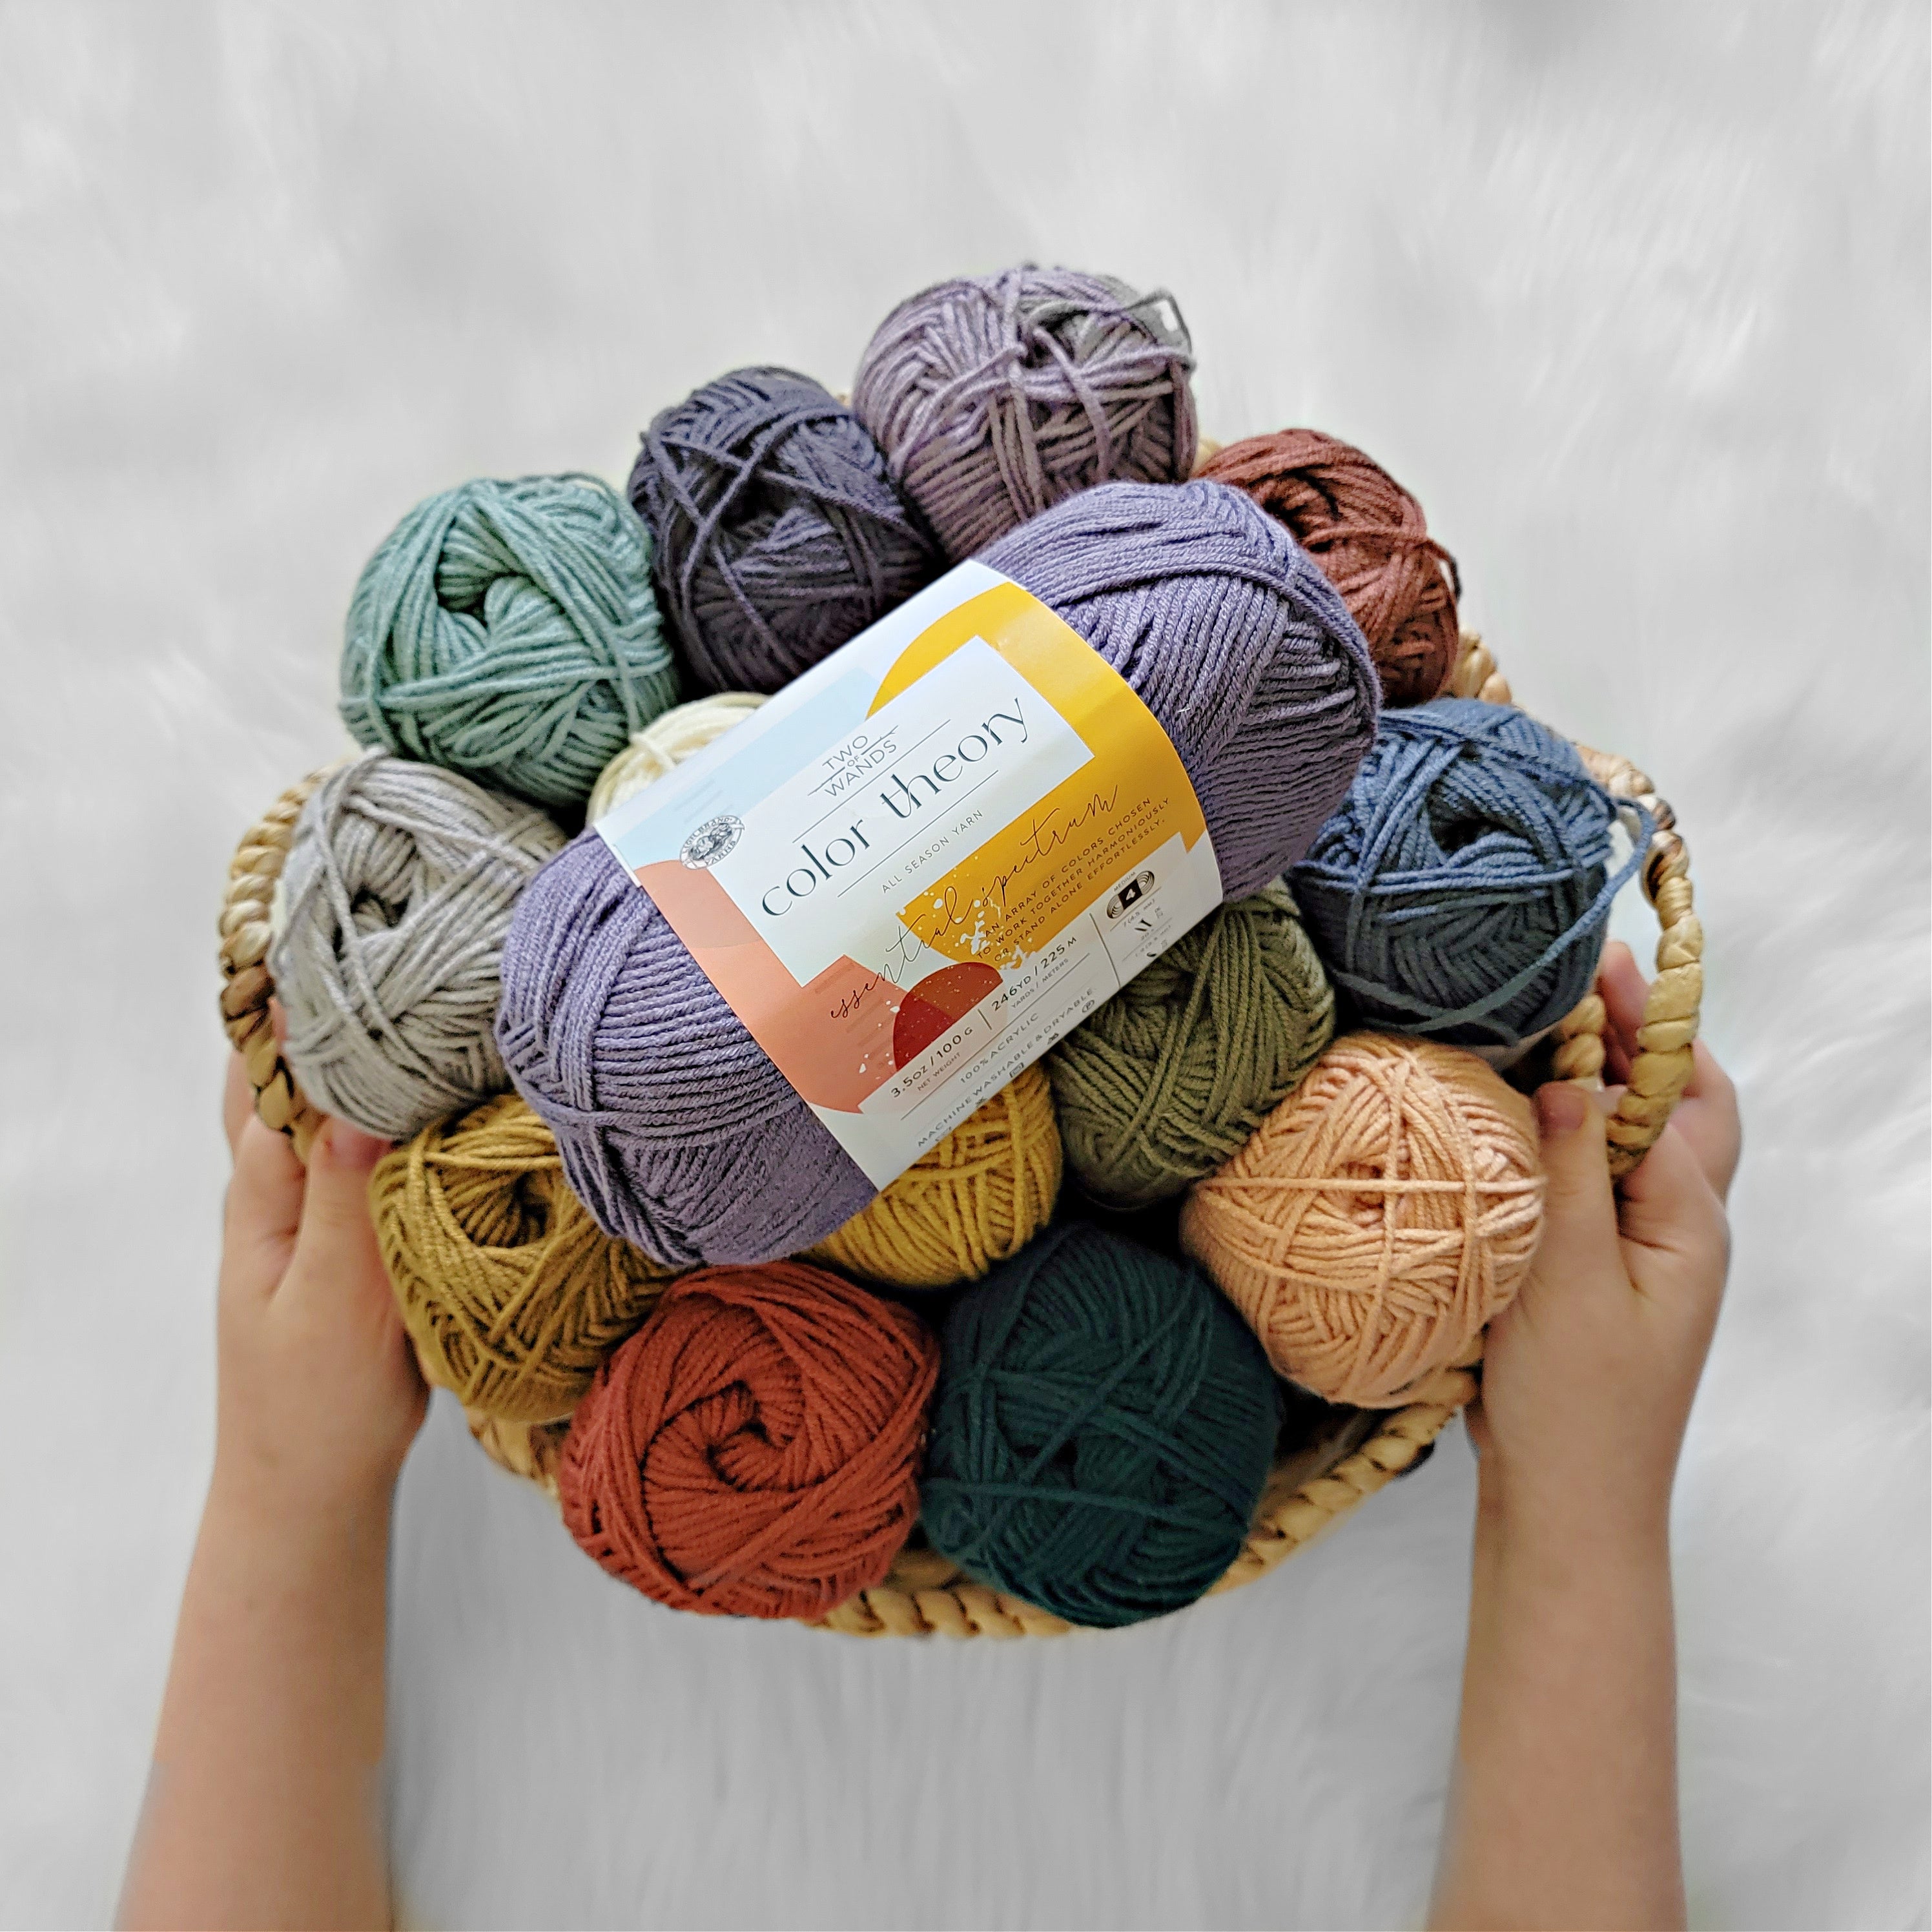 Lion Brand Yarn Color Theory – FurlsCrochet